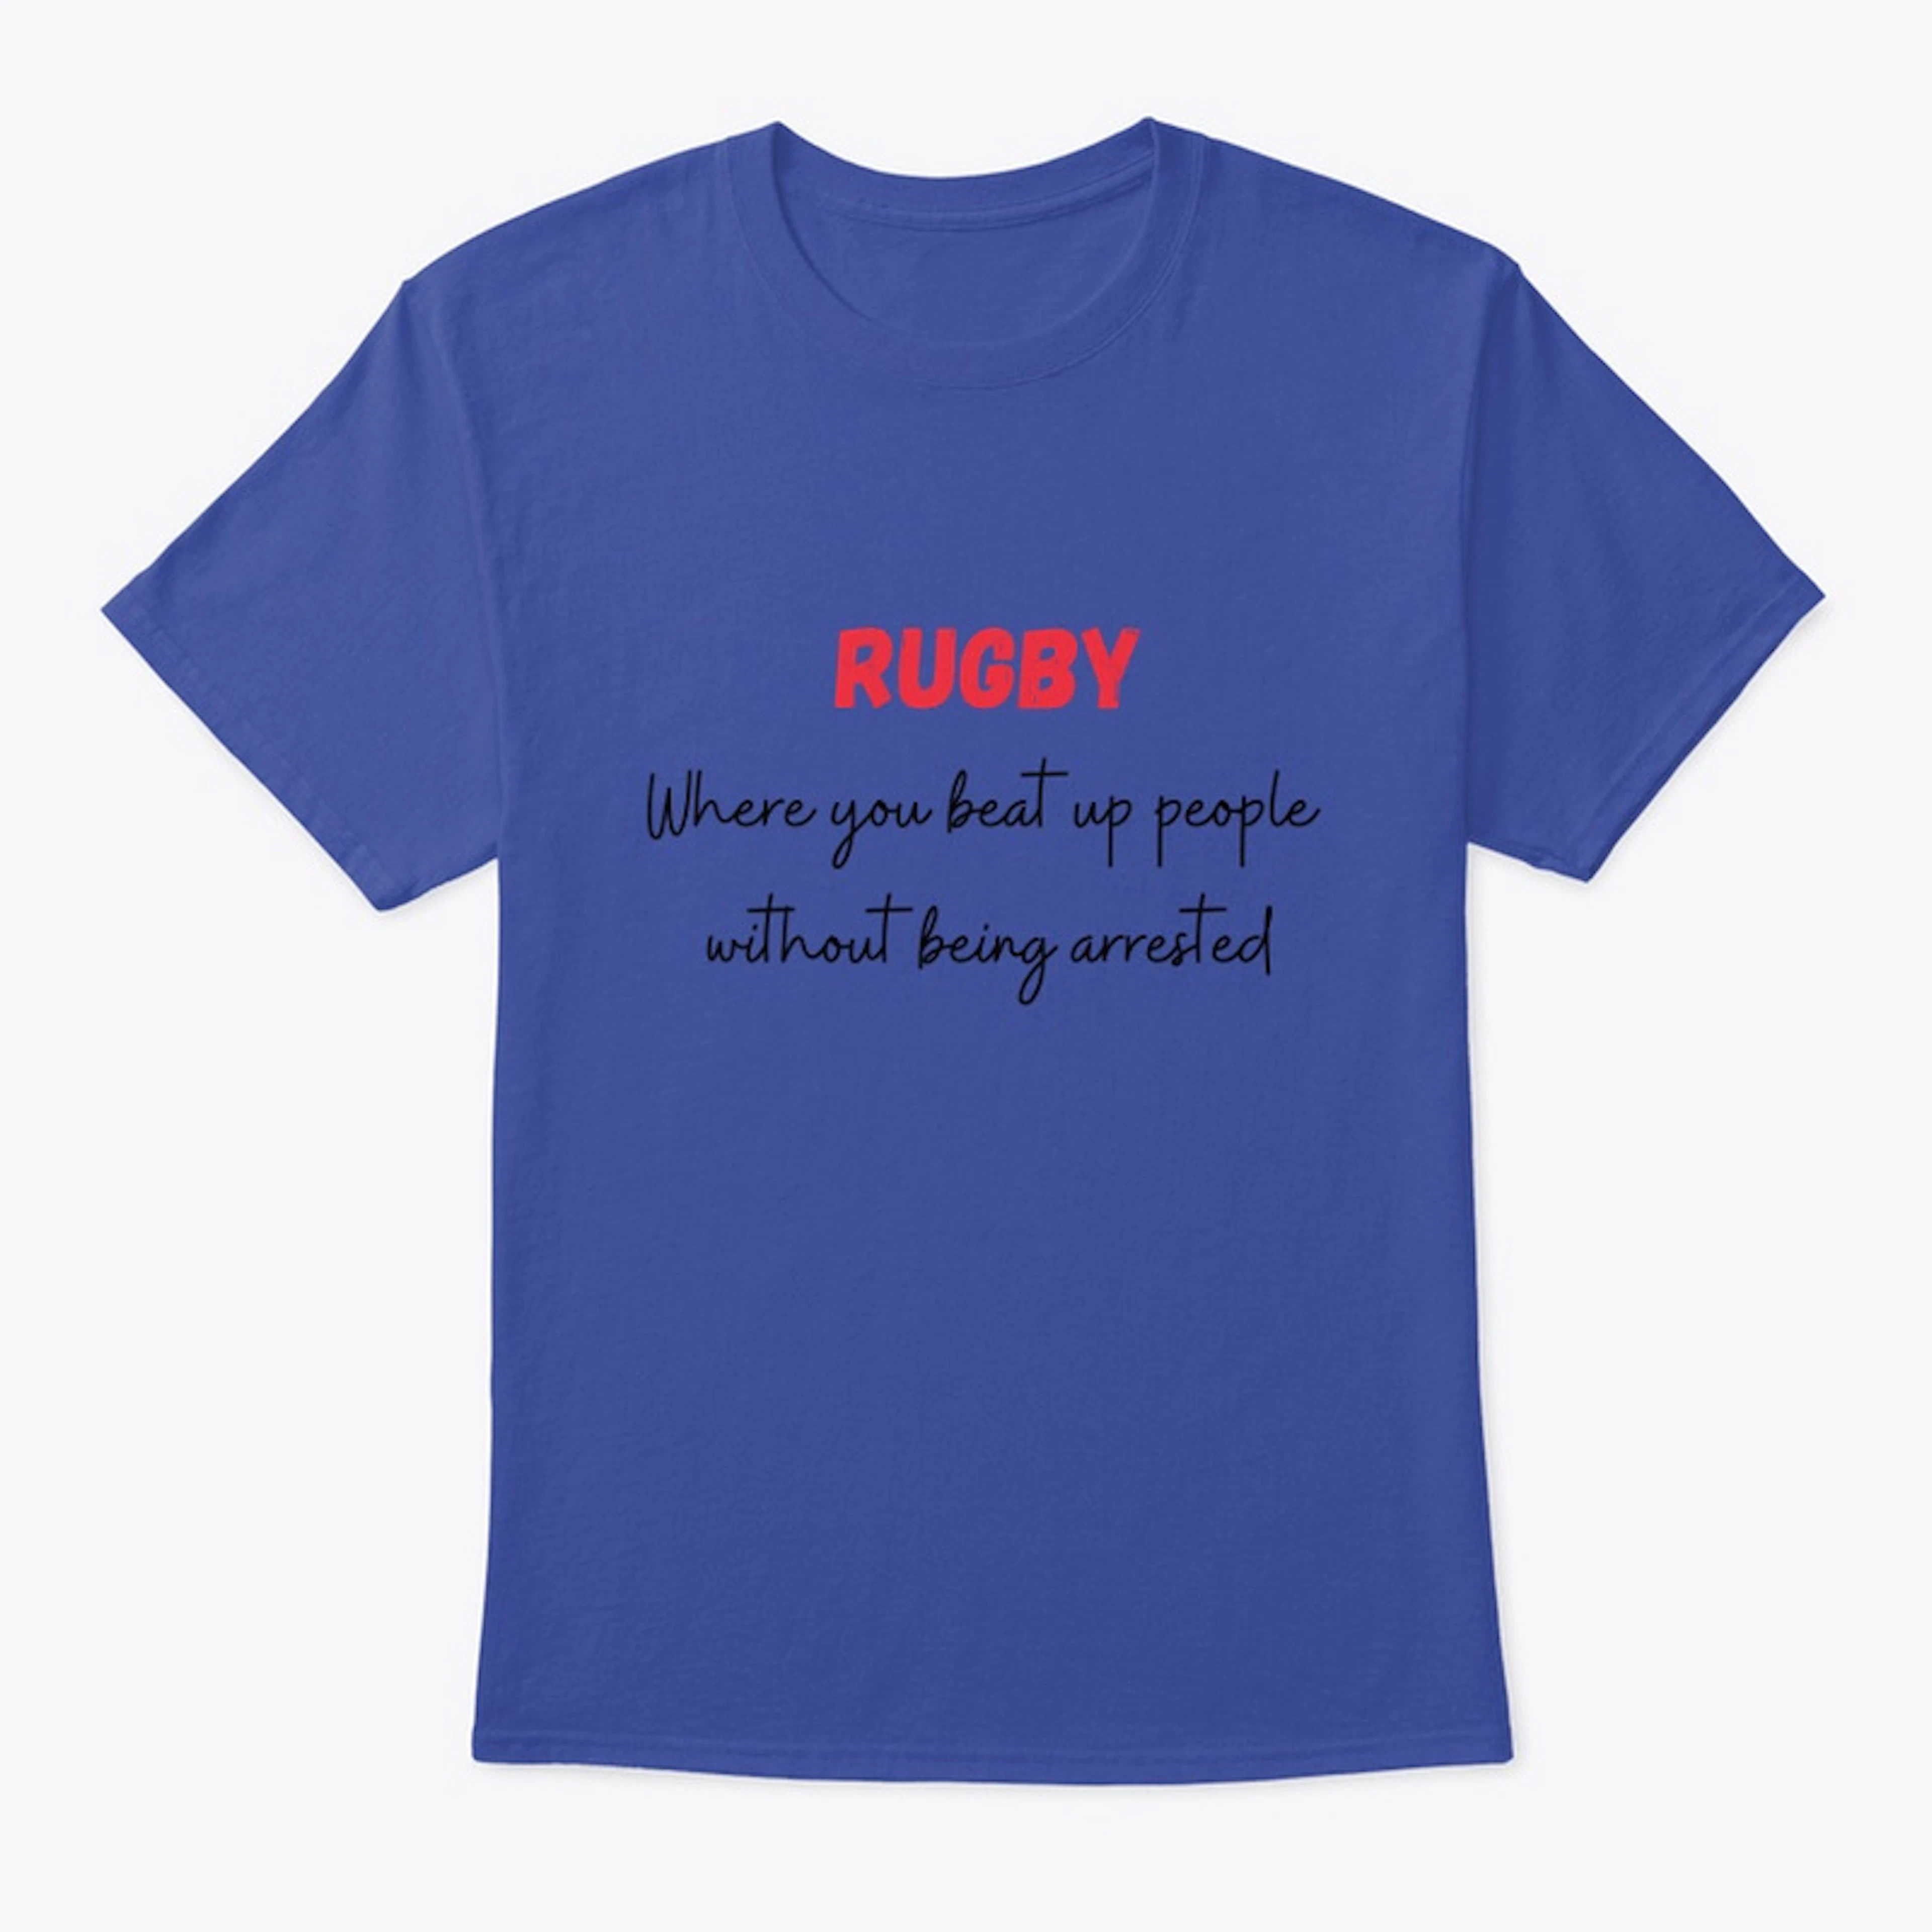 Rugby - Don't get arrested